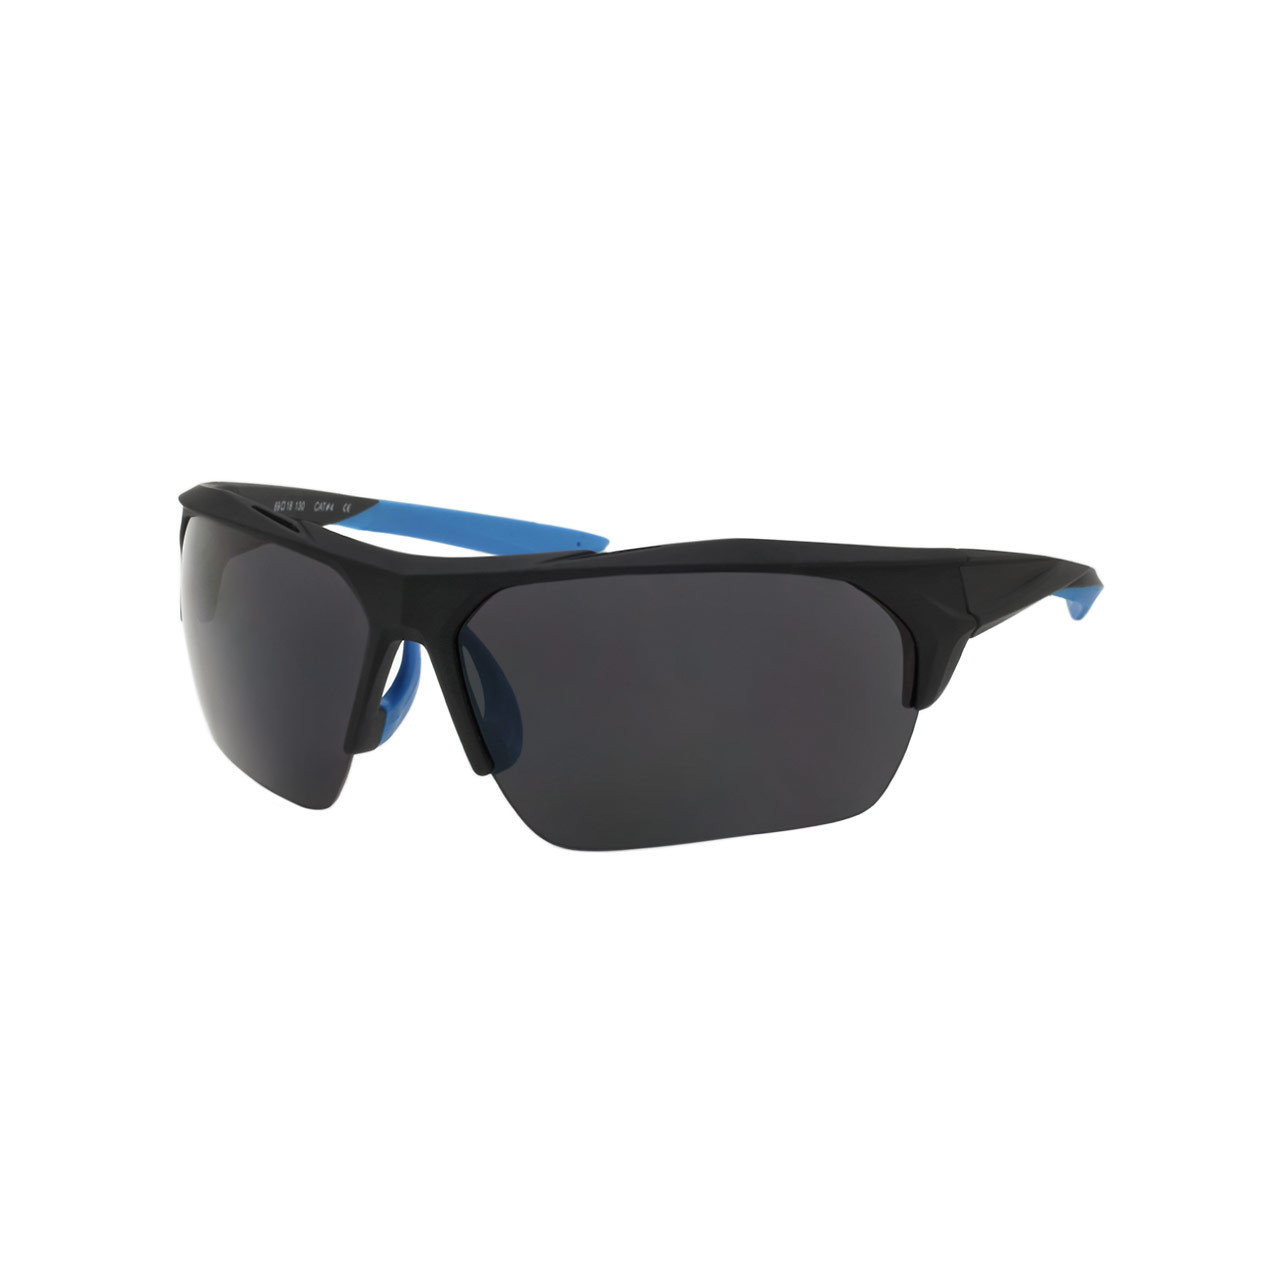 Sunglasses for Sport, Sunglass Wholesale Distributors